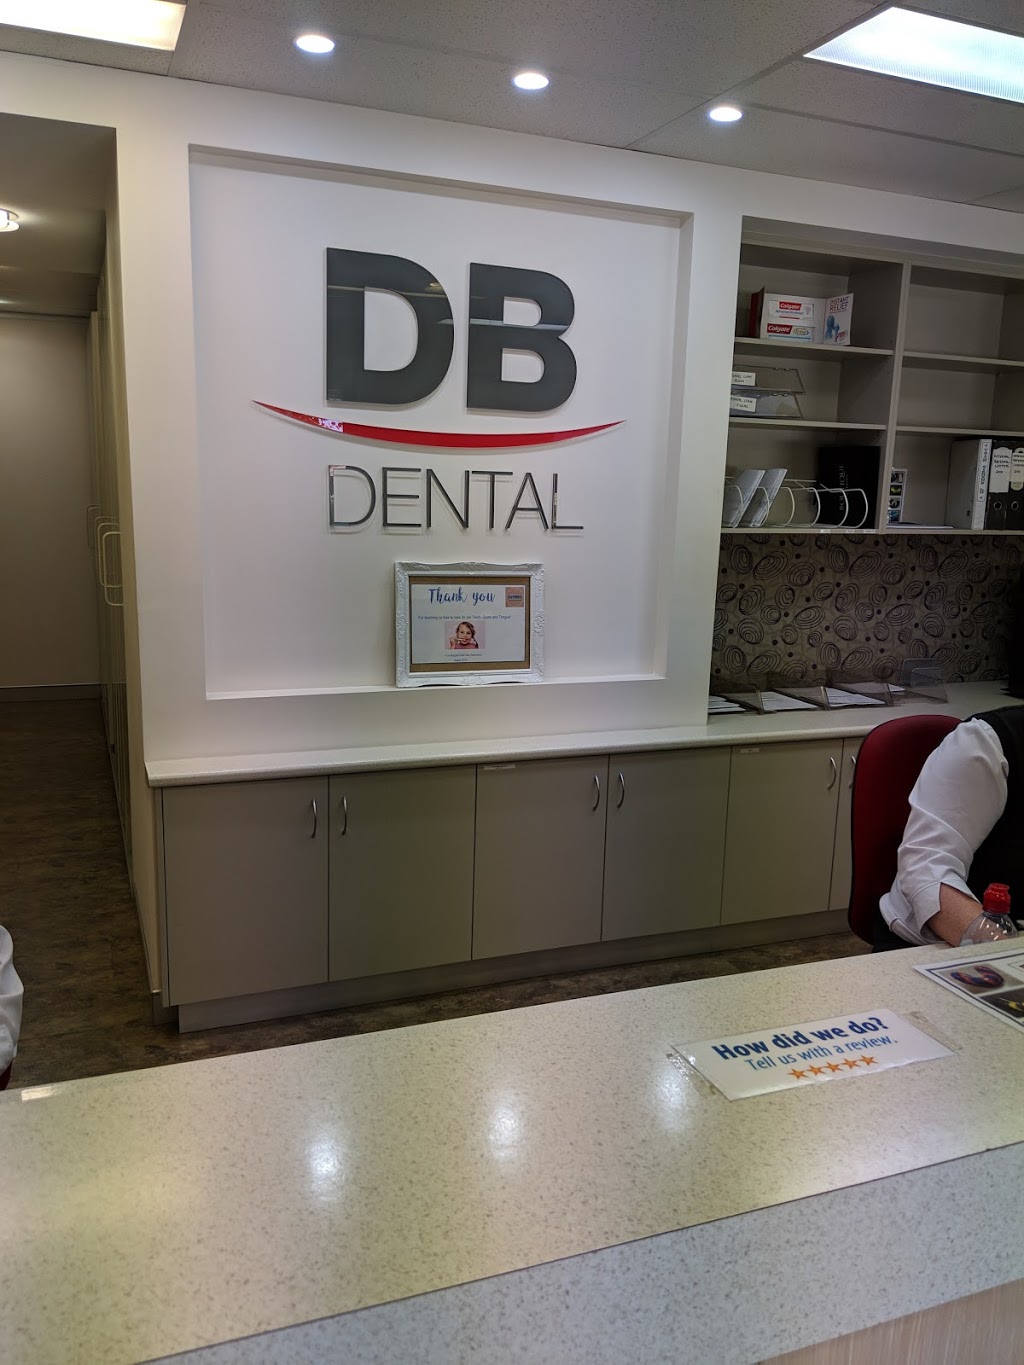 DB Dental – Spearwood | 6 Barrington St, Spearwood WA 6163, Australia | Phone: 1300 483 384